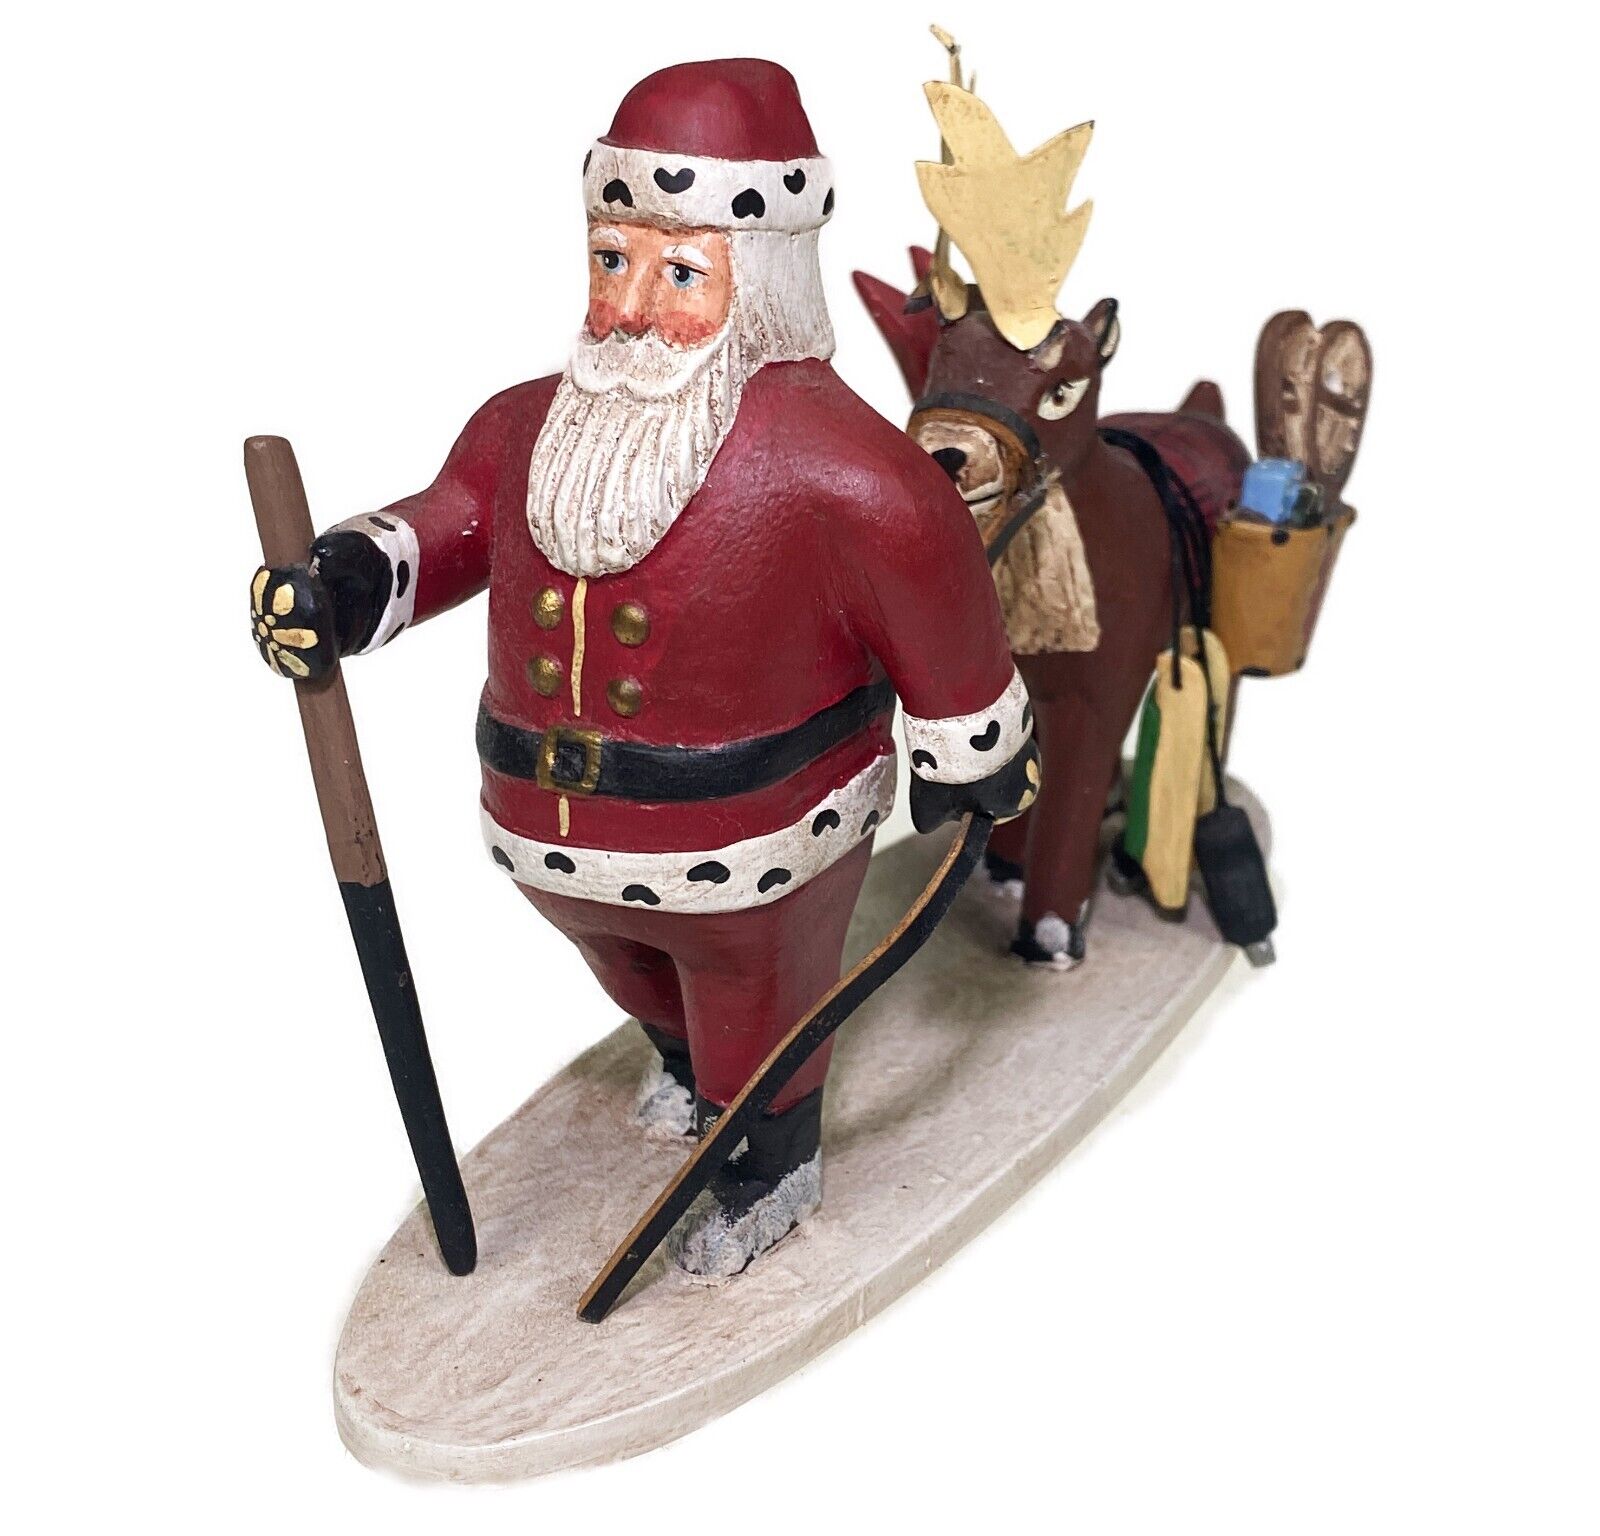 Midwest Cannon Falls Randy Tate Santa Claus Reindeer Christmas Figurine 